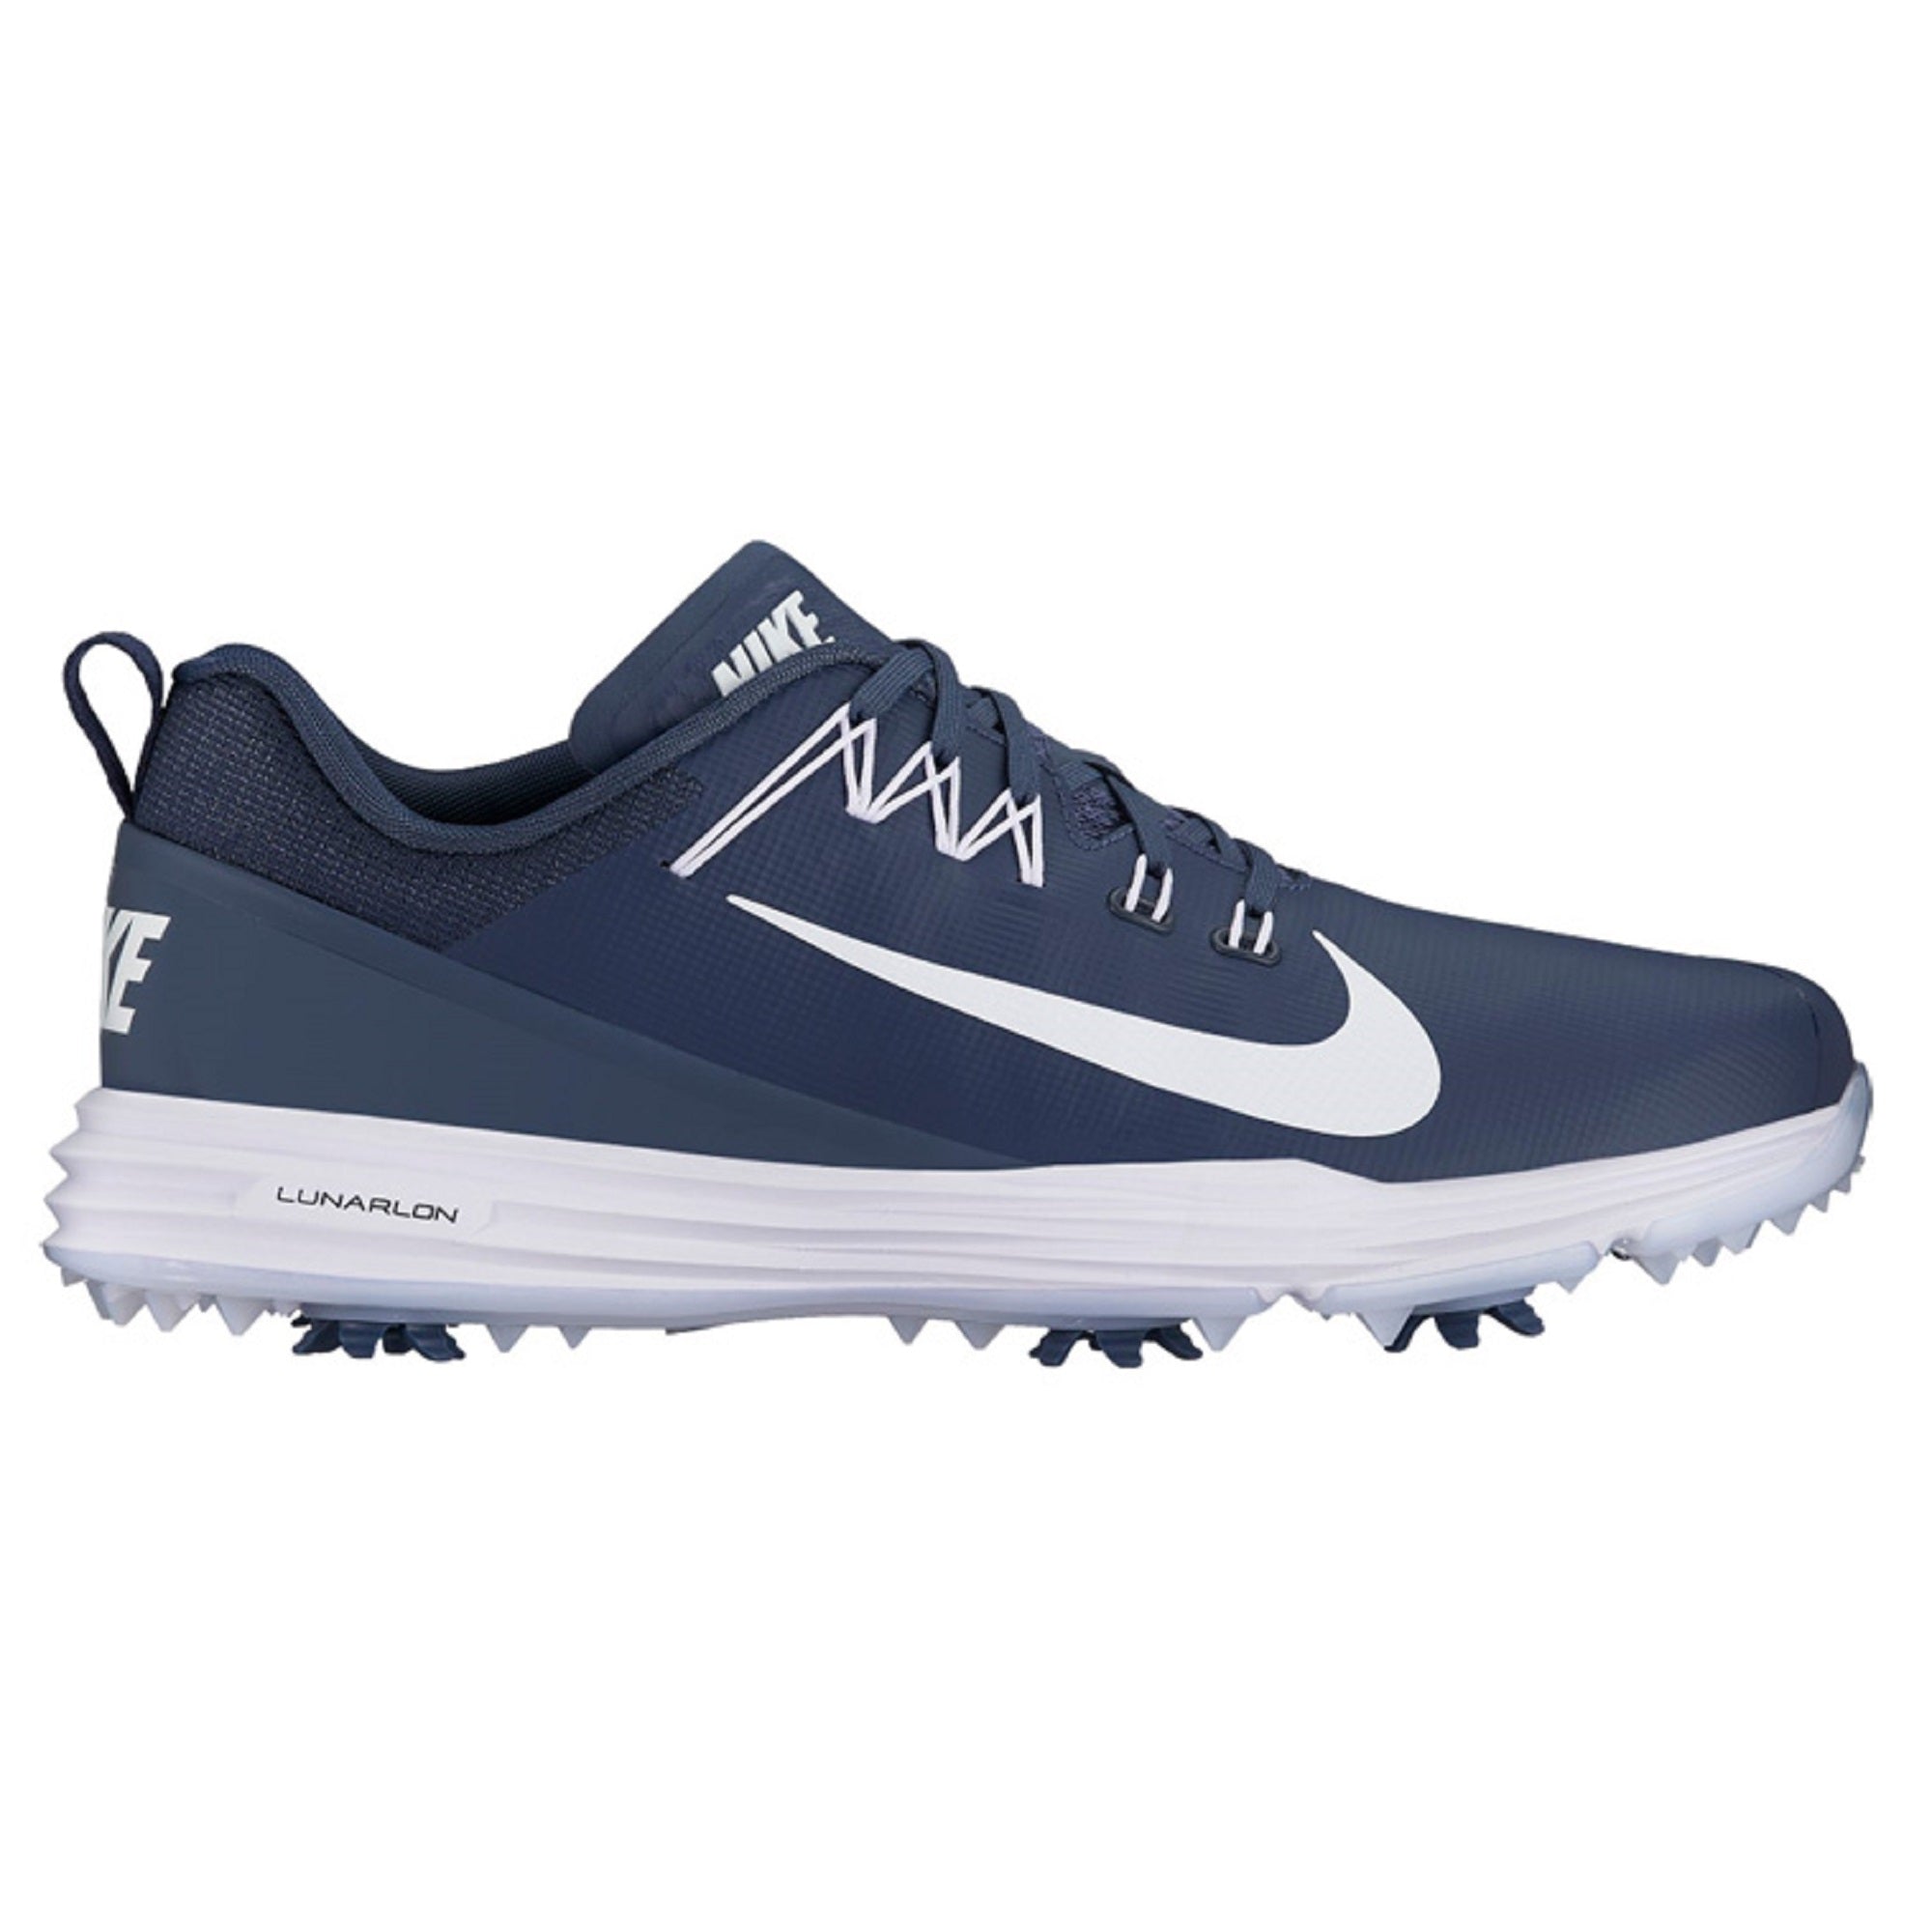 nike lunar command 2 golf shoes